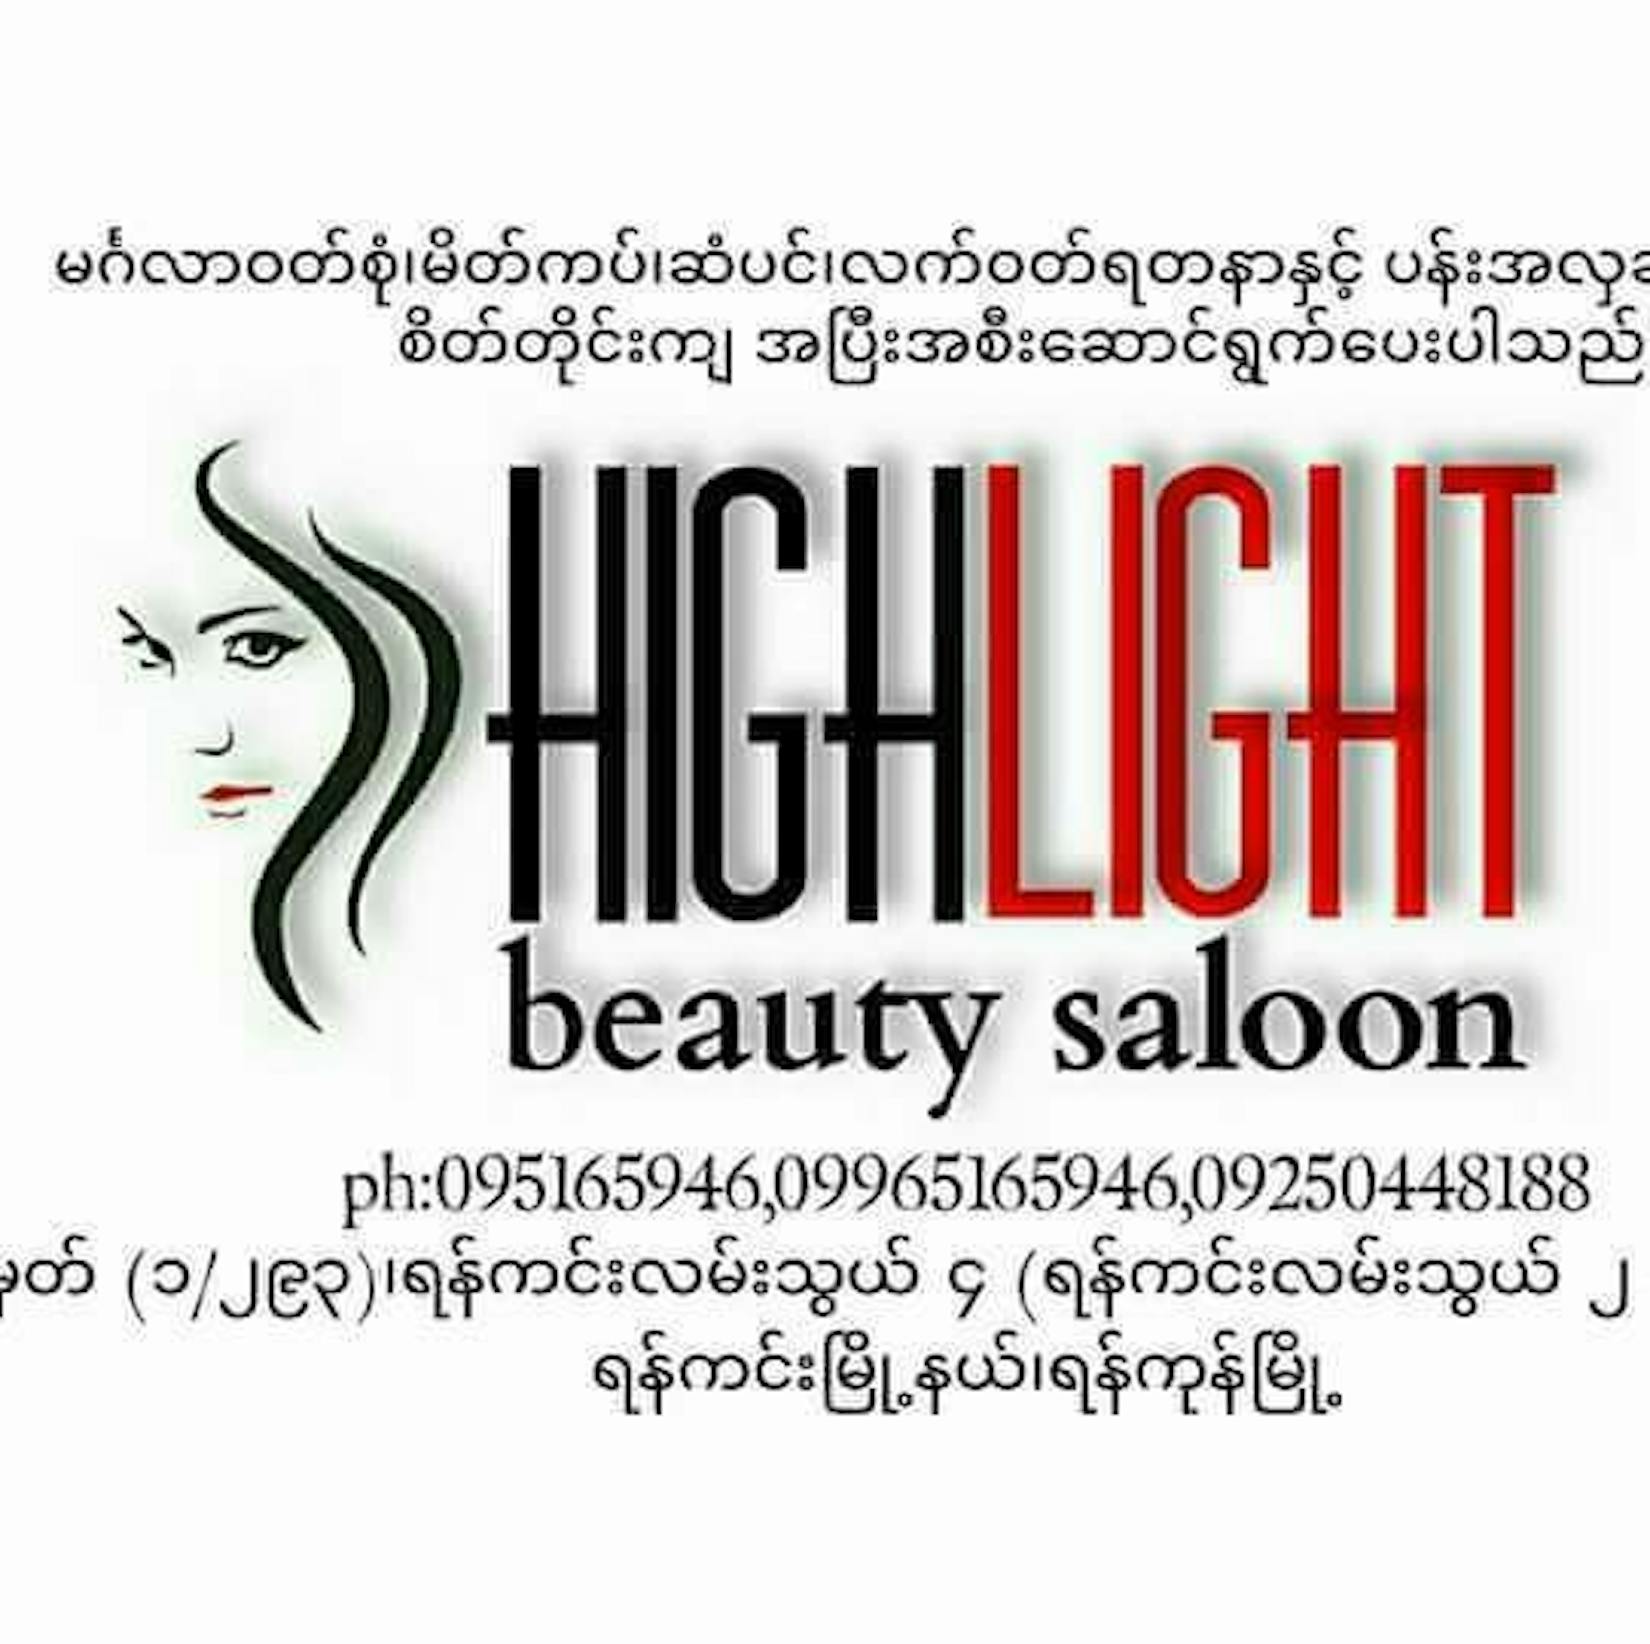 HighLight  Beauty saloon | Beauty